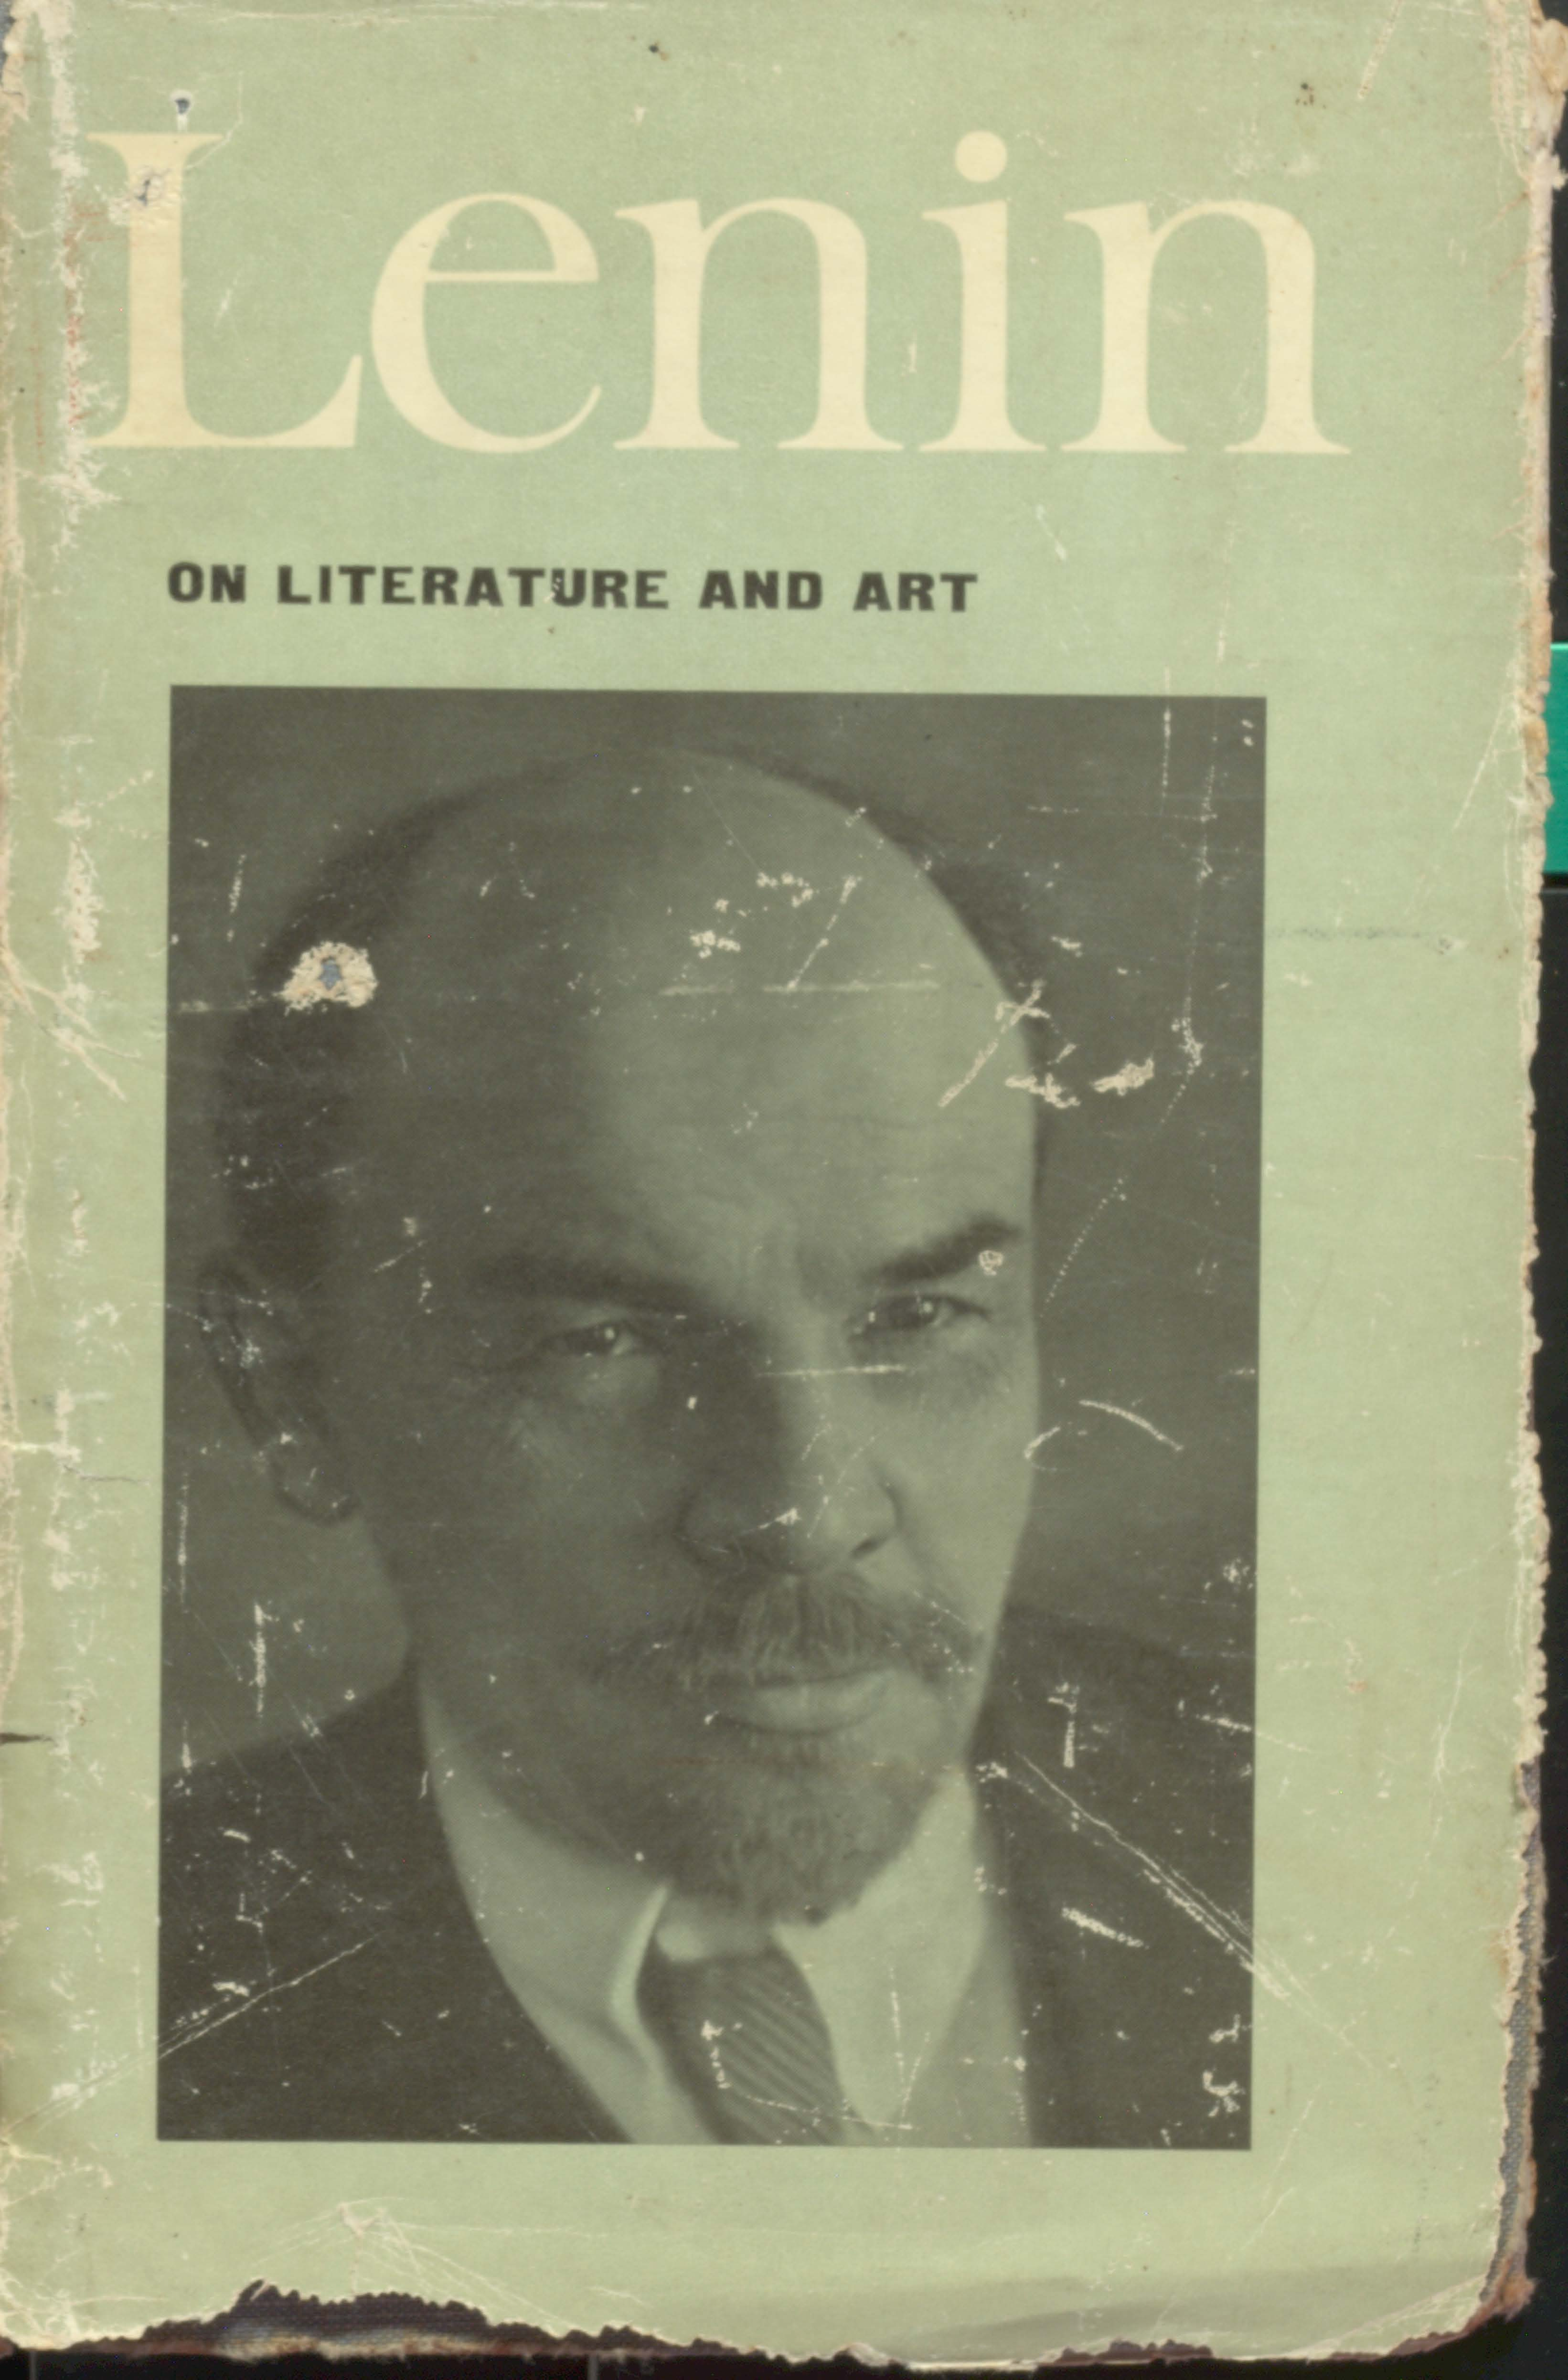 Lenin on literature and art